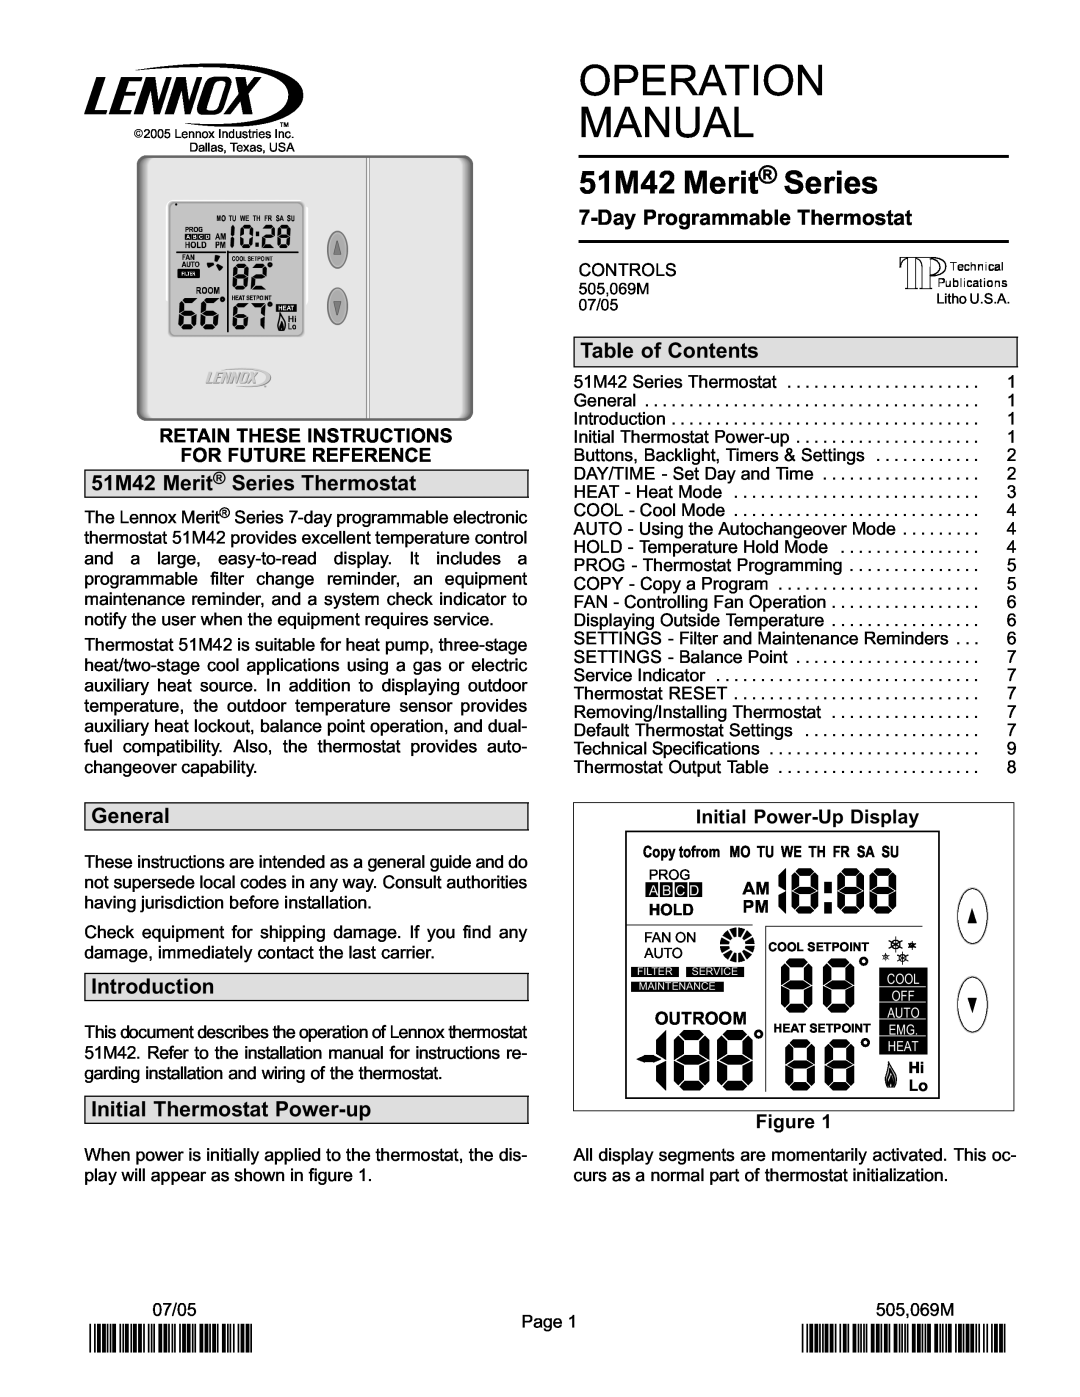 Lennox International Inc 51M37 P505069M, 51M42 Merit Series Thermostat, 7−Day Programmable Thermostat, Pm, 2P0705 